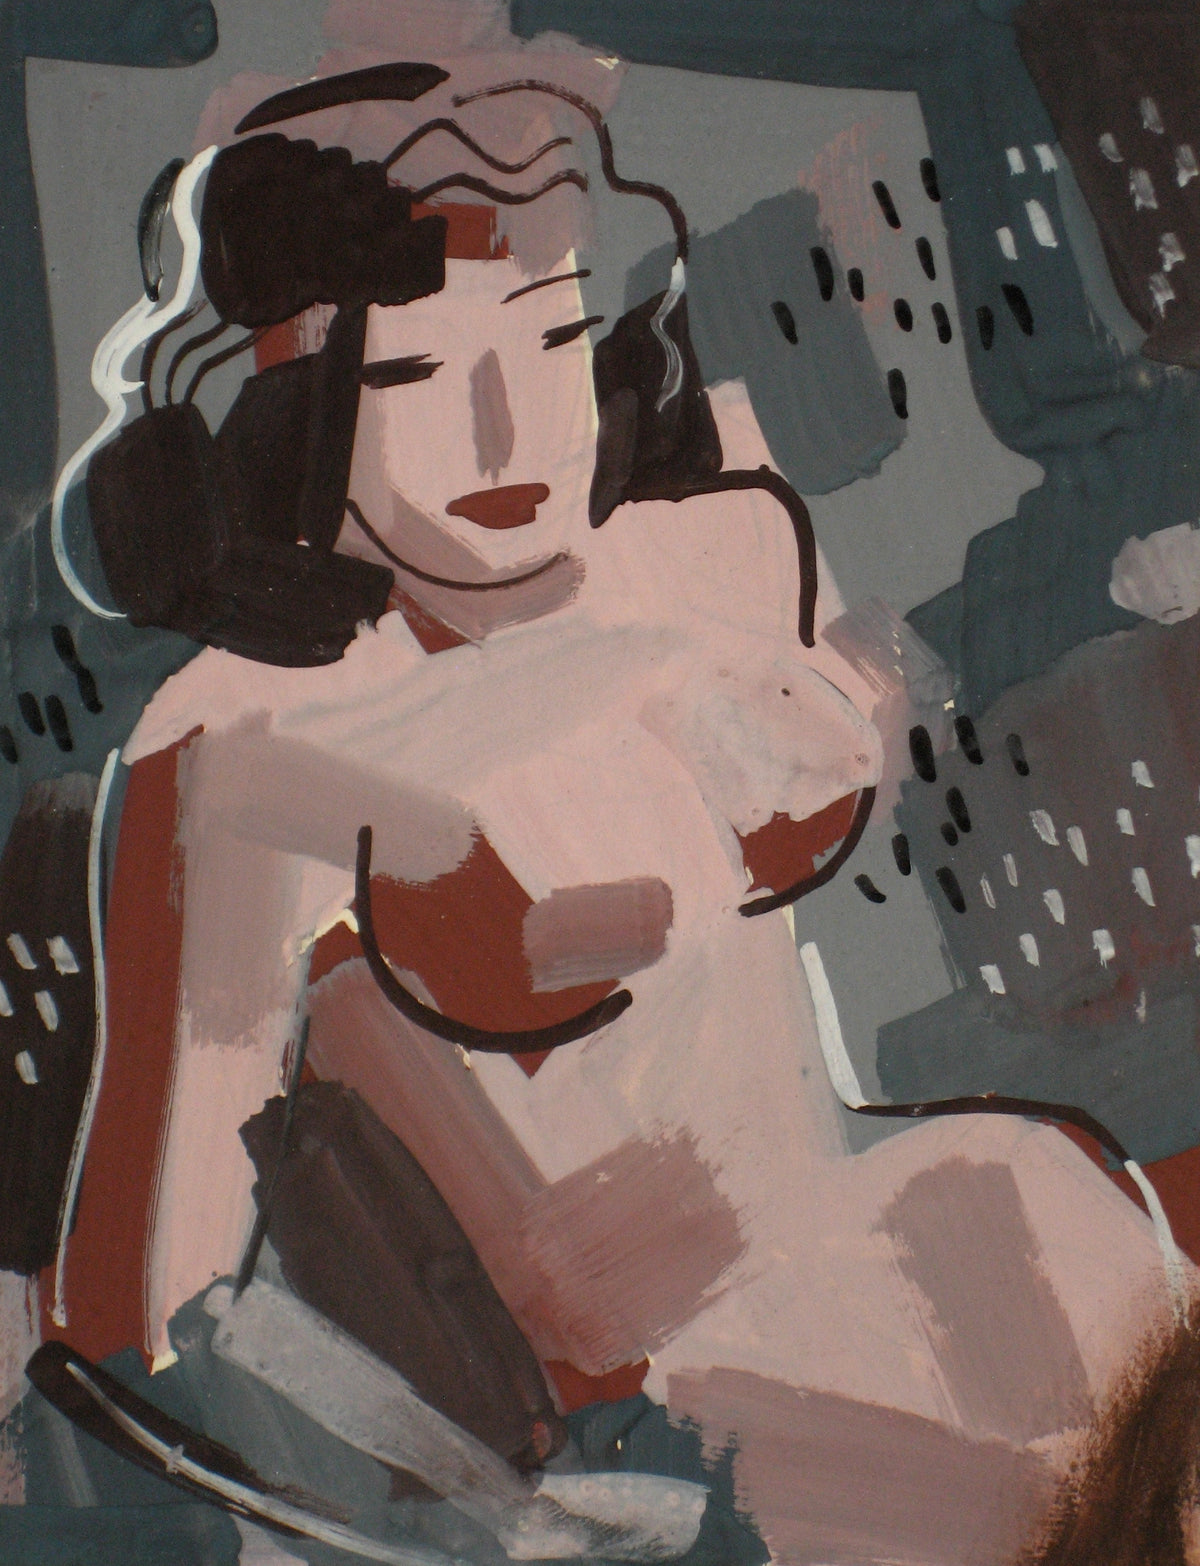 Reclining Female Nude in Rose &lt;br&gt;1930-60s, Tempera Paint on Paper &lt;br&gt;&lt;br&gt;#13188